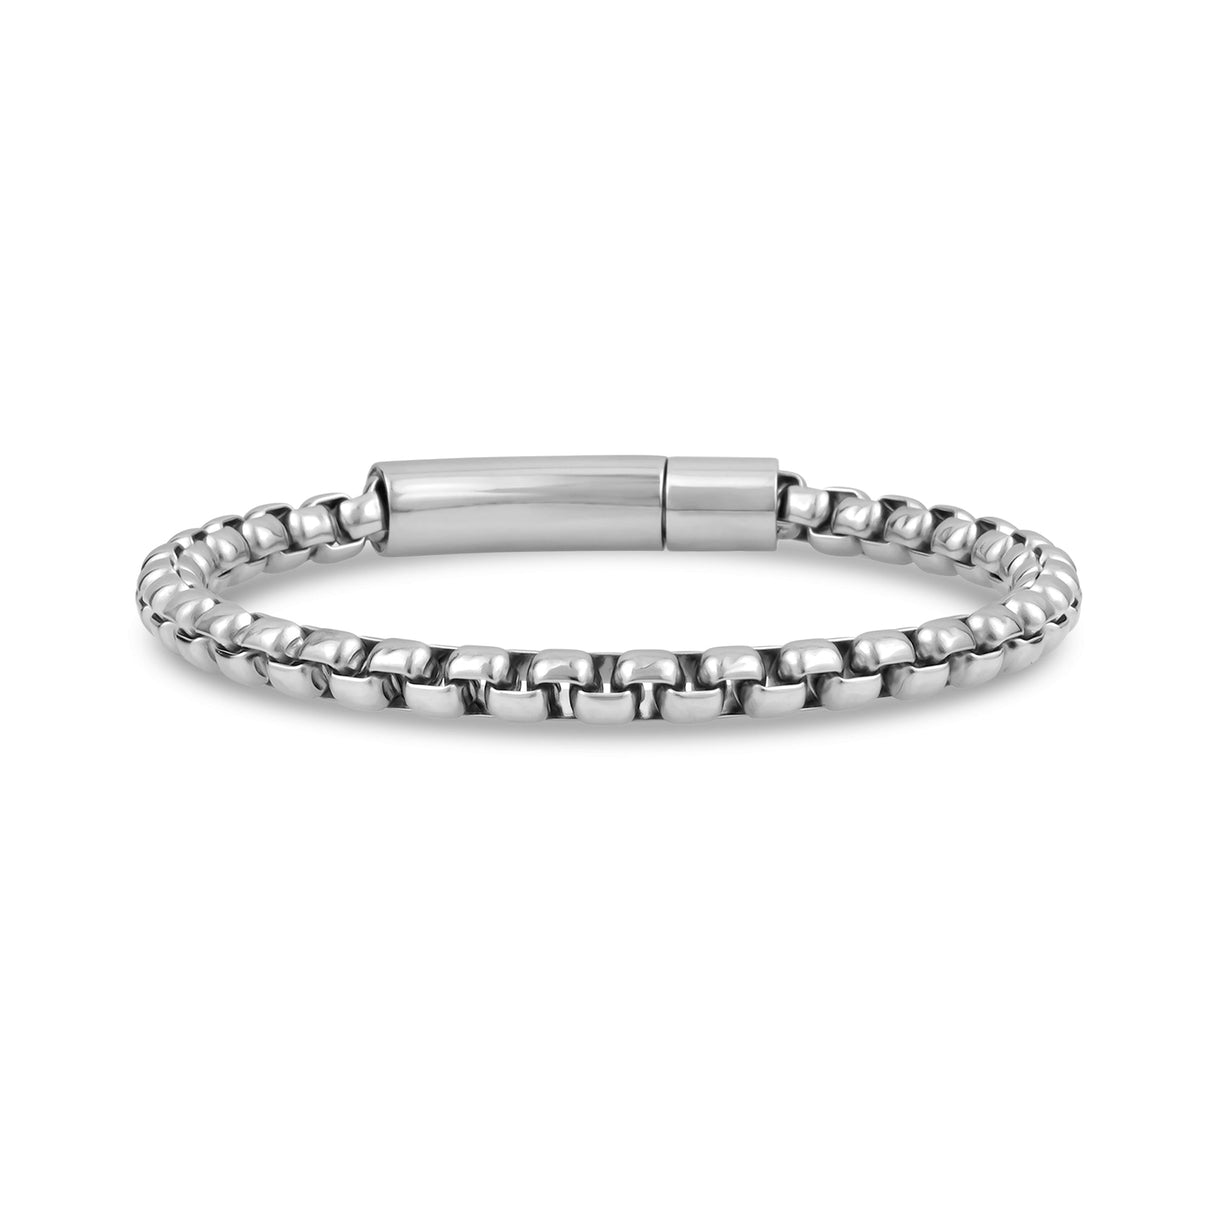 Mens Steel Bracelets - 5mm Stainless Steel Round Box Link Bracelet